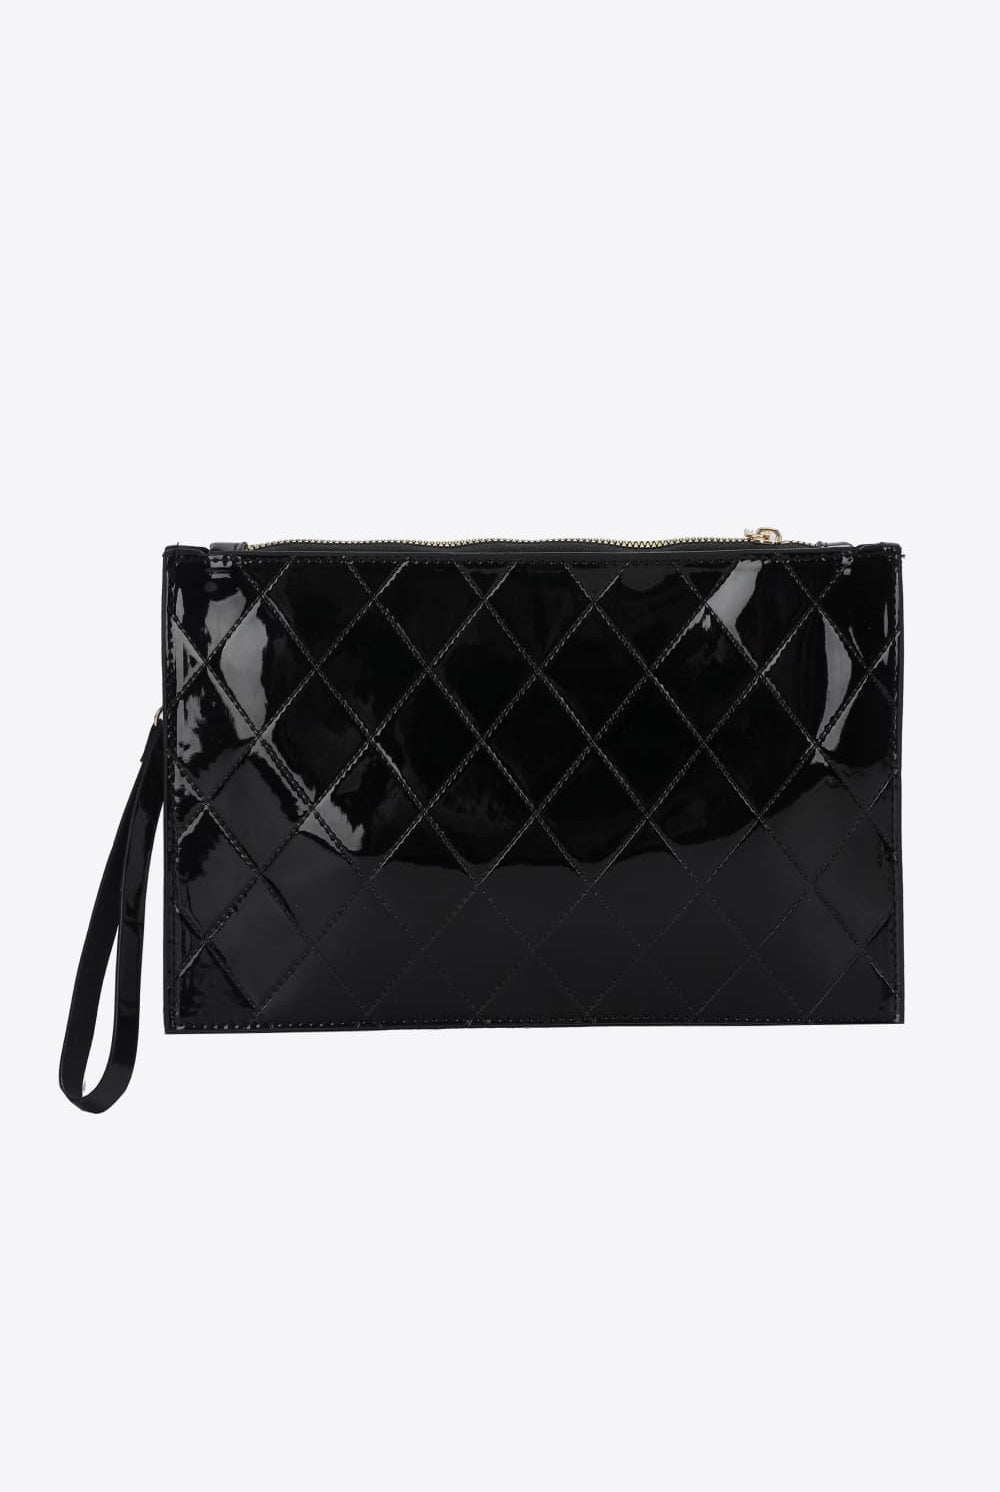 PU Leather Wristlet Bag - GemThreads Boutique